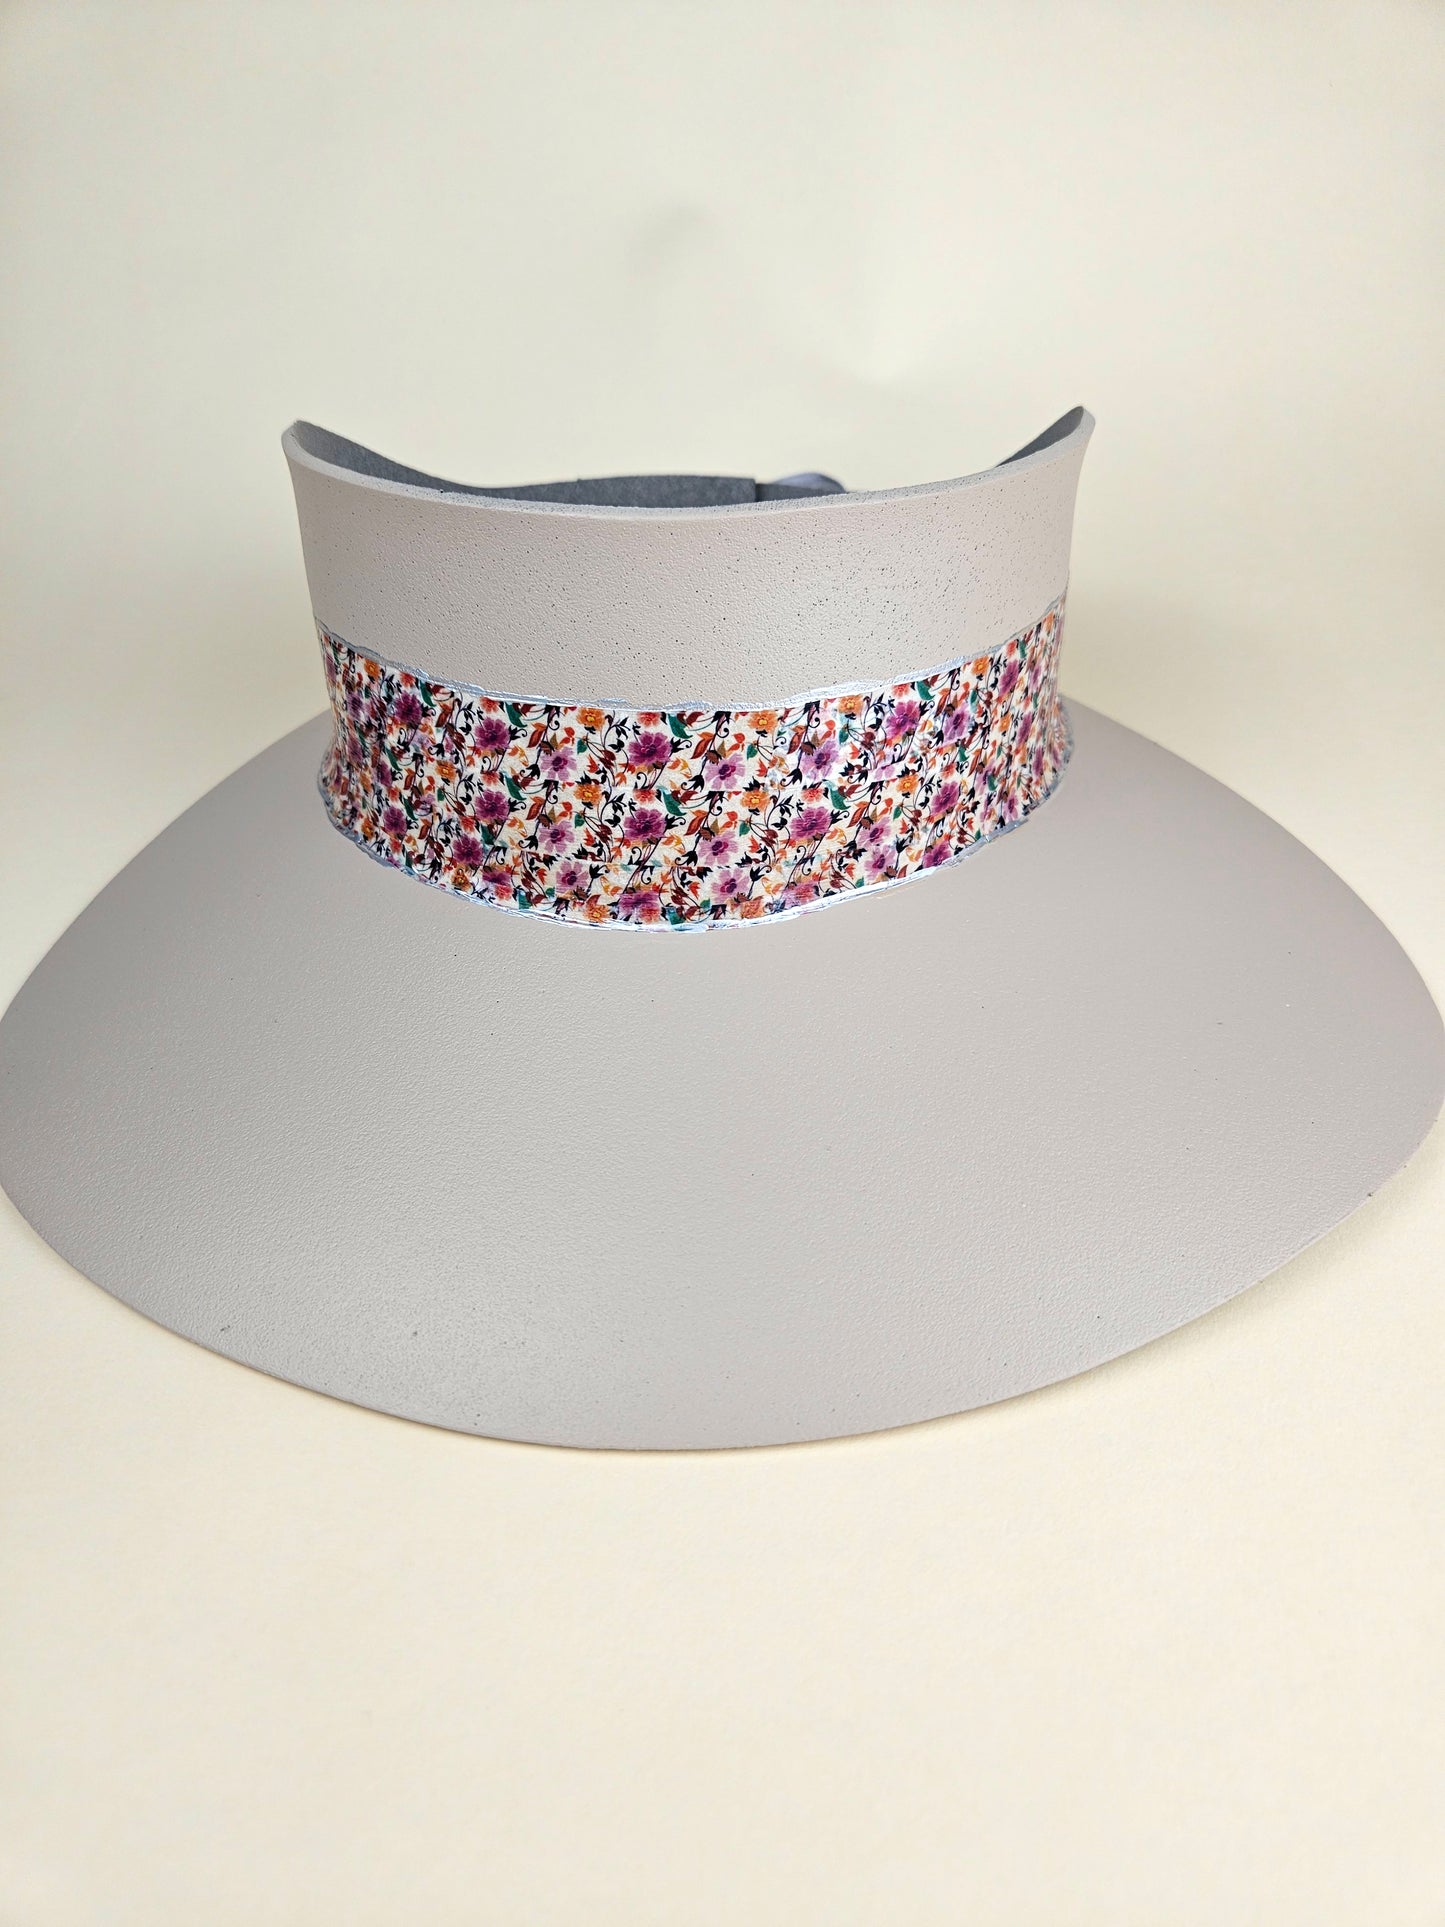 Tall Peach Gray Audrey Sun Visor Hat with Pretty Multicolor Floral Band: Tea, Walks, Brunch, Fancy, Golf, Summer, Church, No Headache, Pool